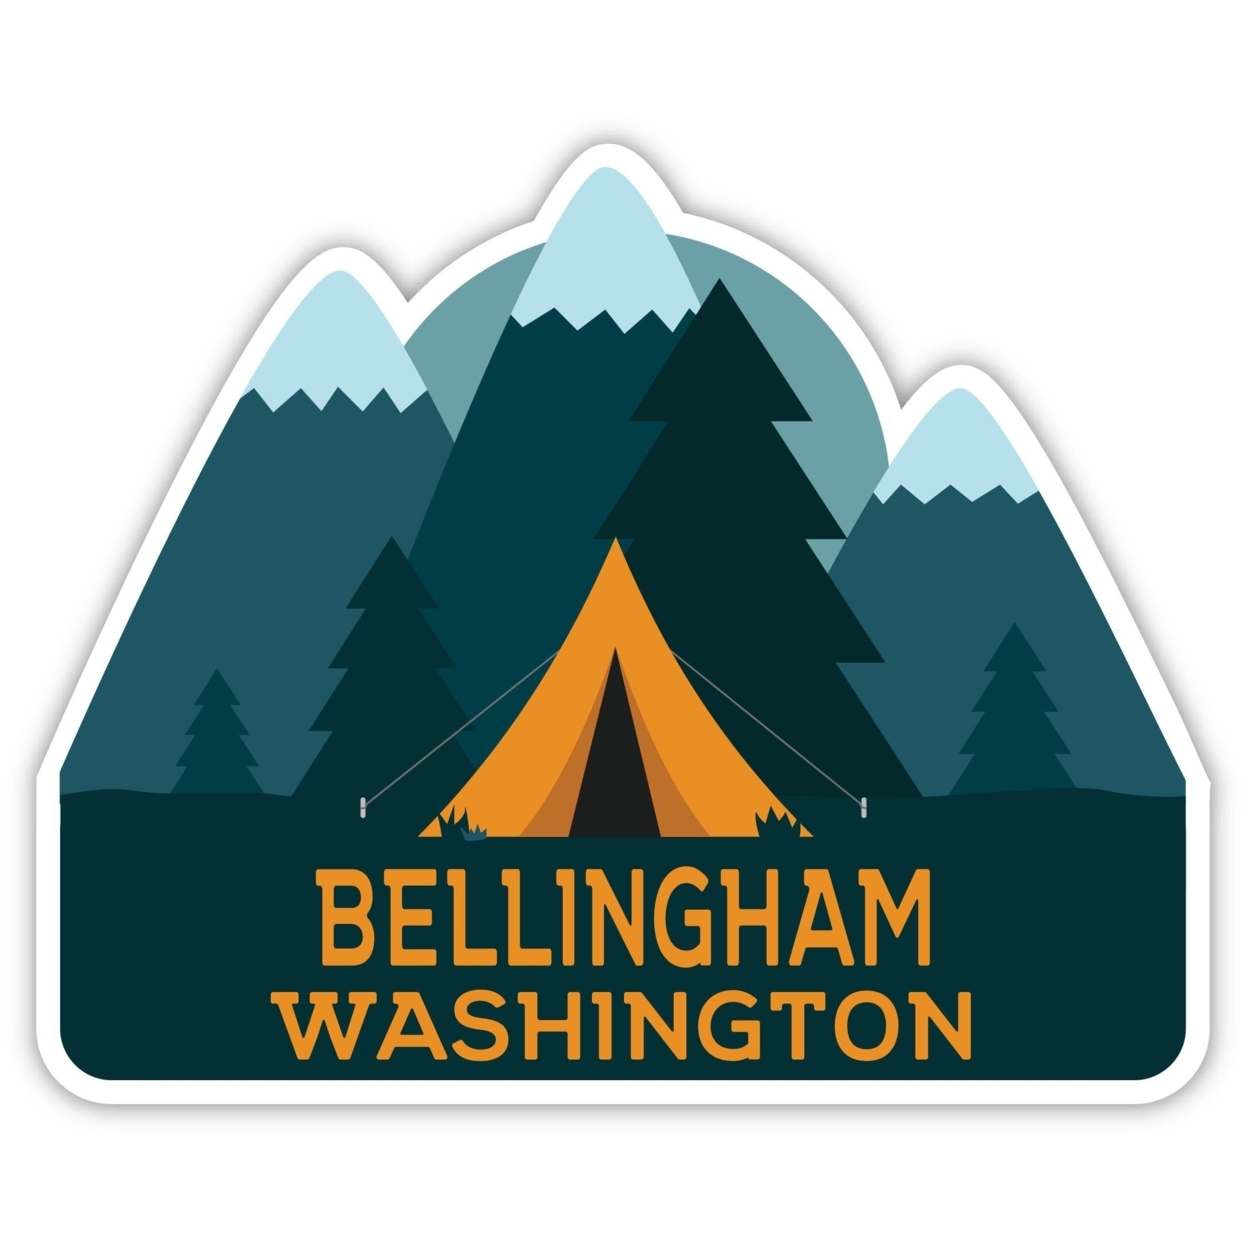 Bellingham Washington Souvenir Decorative Stickers (Choose Theme And Size) - 4-Pack, 4-Inch, Tent